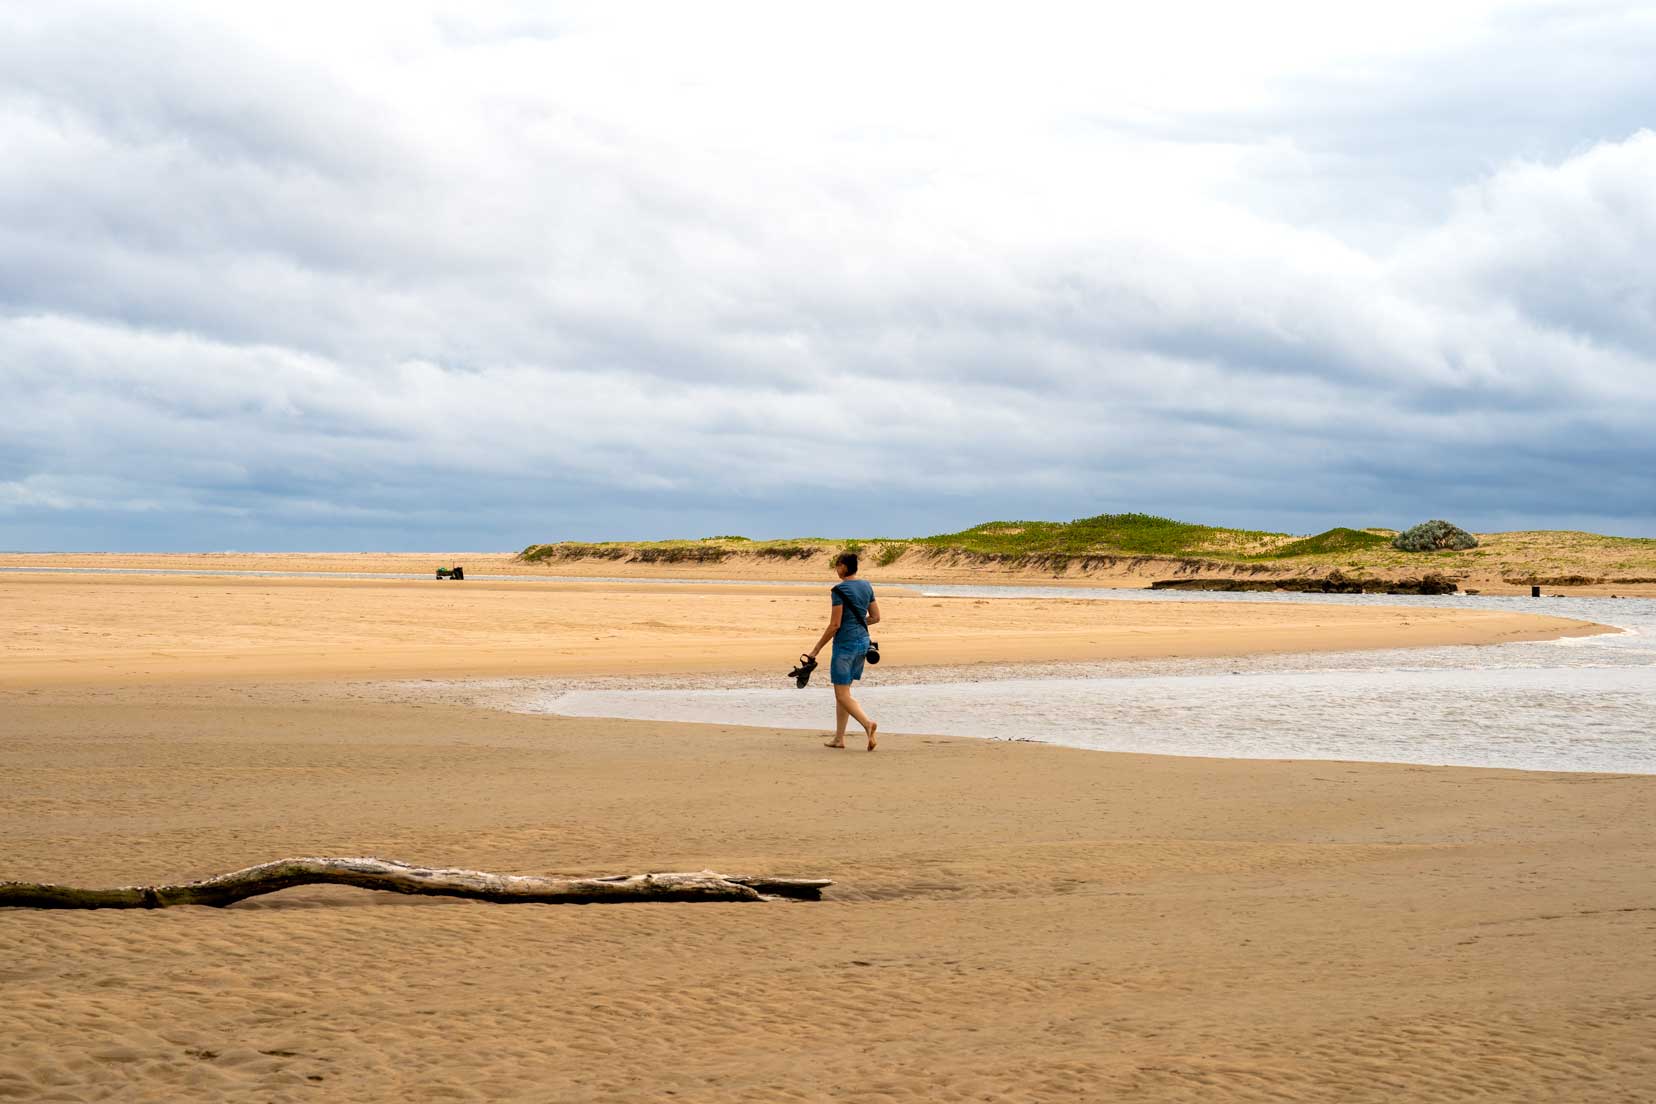 Shelley walking on the sand of Kosi Bay estuary